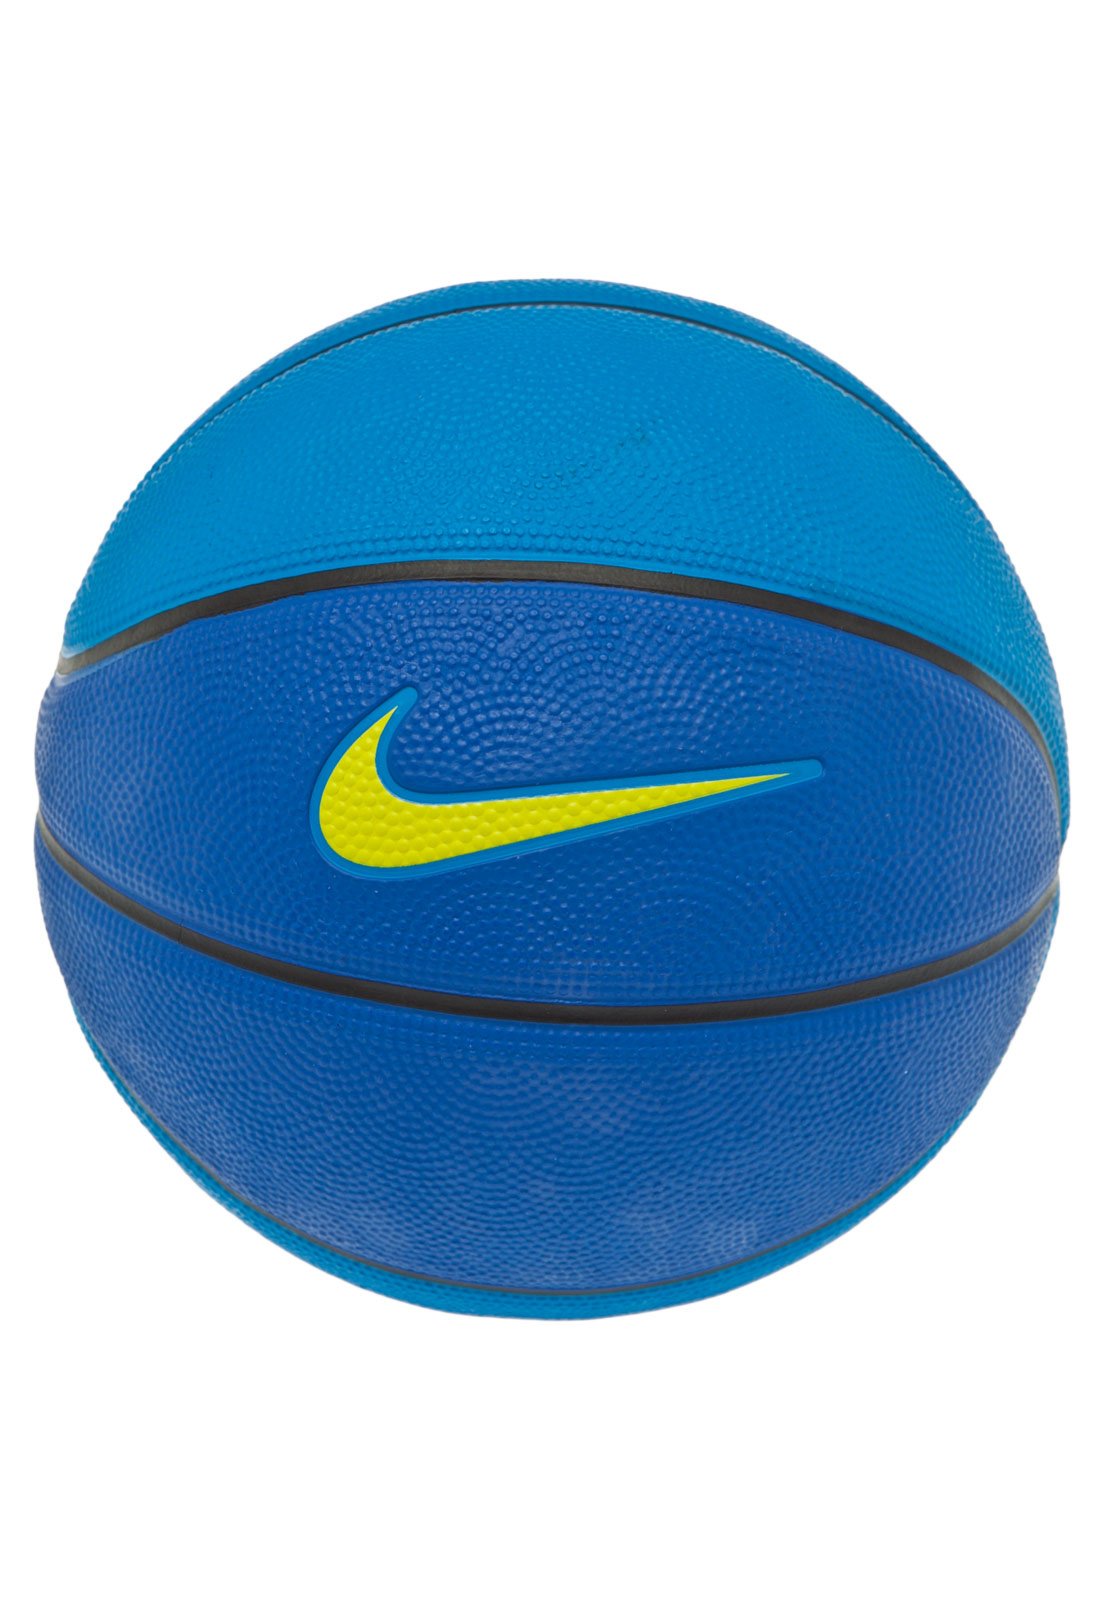 Bola Basquete Nike Swoosh Mini Tamanho 3 Mini - Azul+Branco